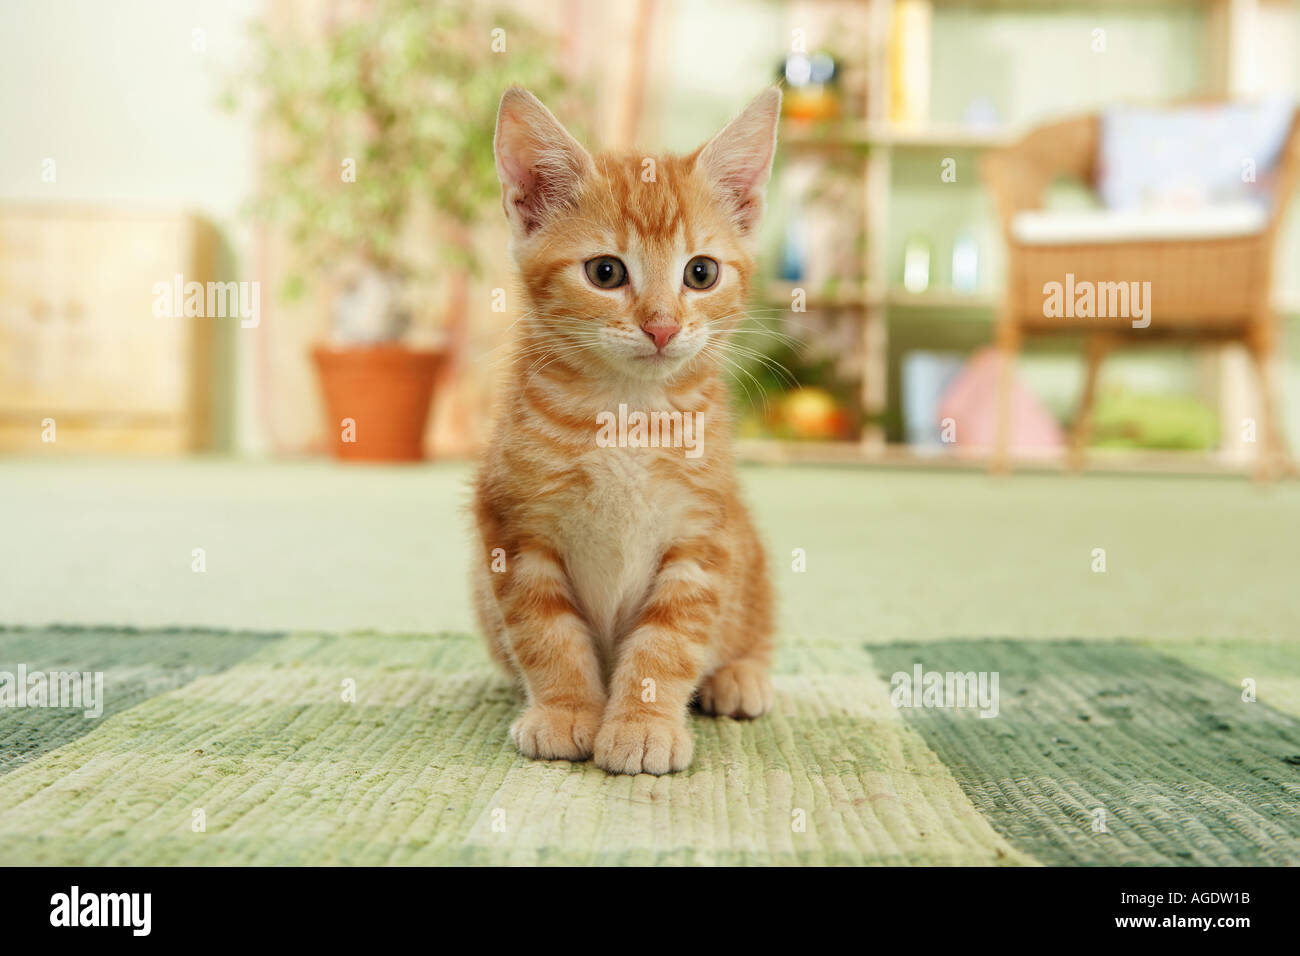 CAT. Kitten sitting in straw Stock Photo - Alamy